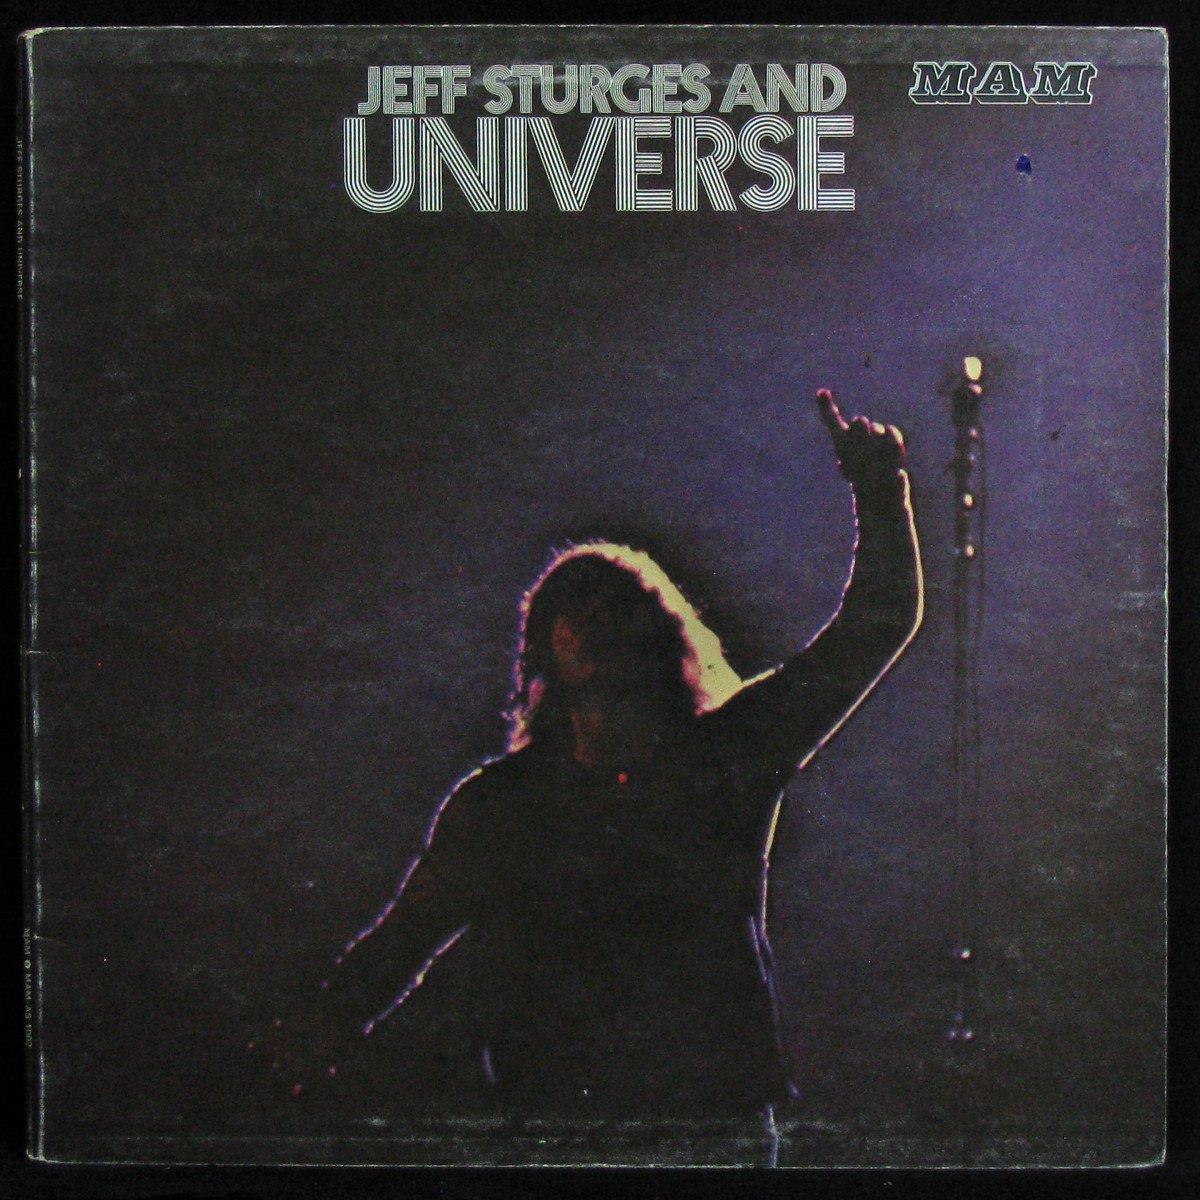 Jeff Sturges And Universe